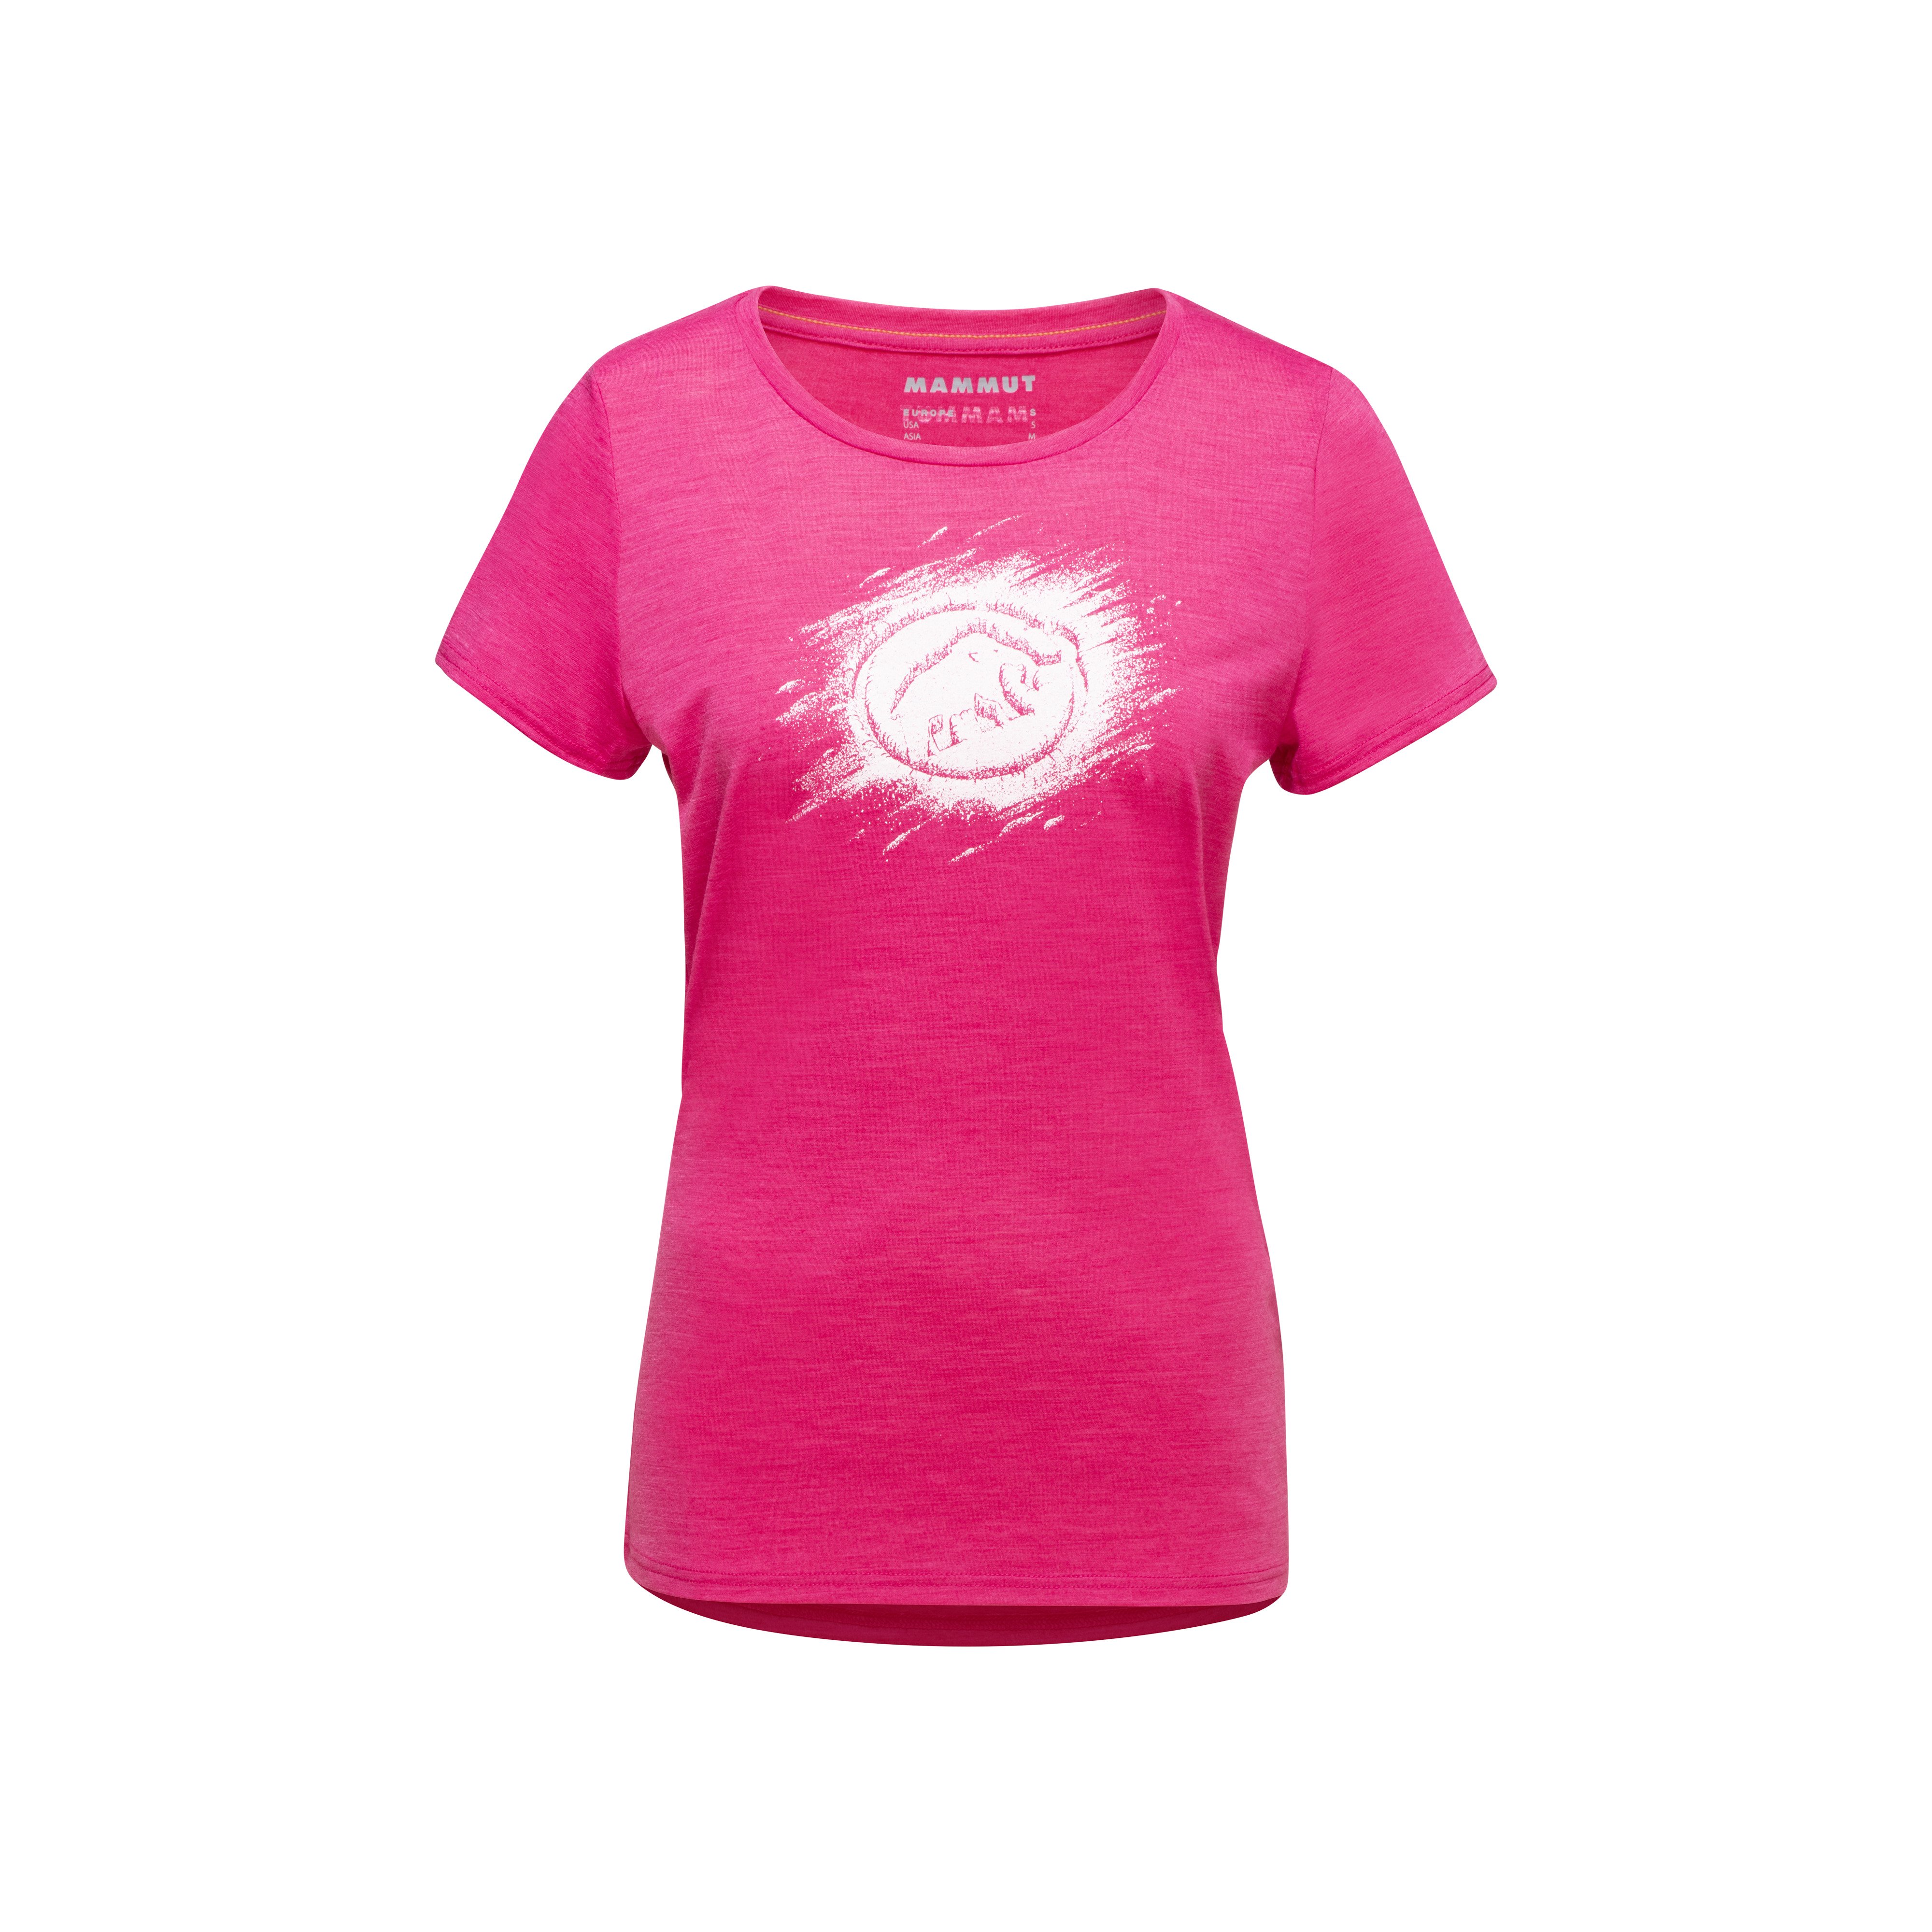 Alnasca T-Shirt Women Graphic - pink melange, XS thumbnail